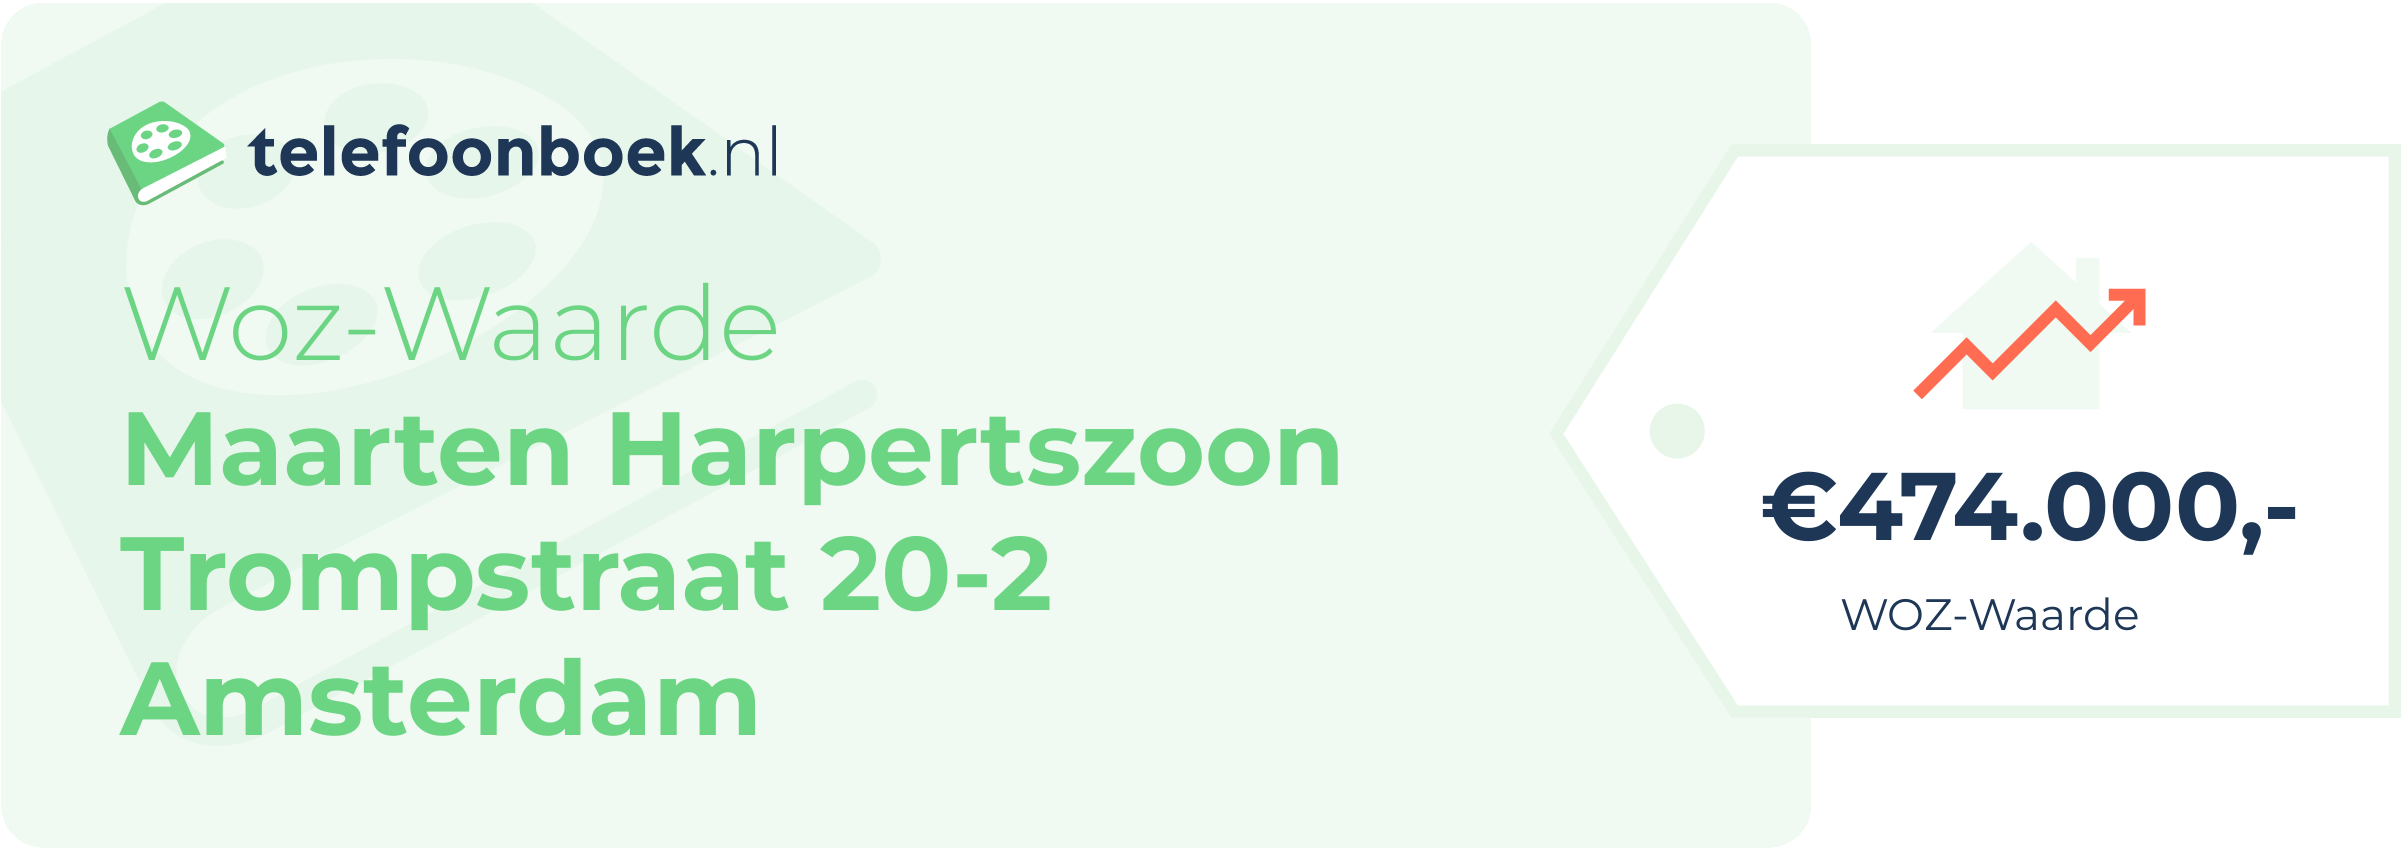 WOZ-waarde Maarten Harpertszoon Trompstraat 20-2 Amsterdam